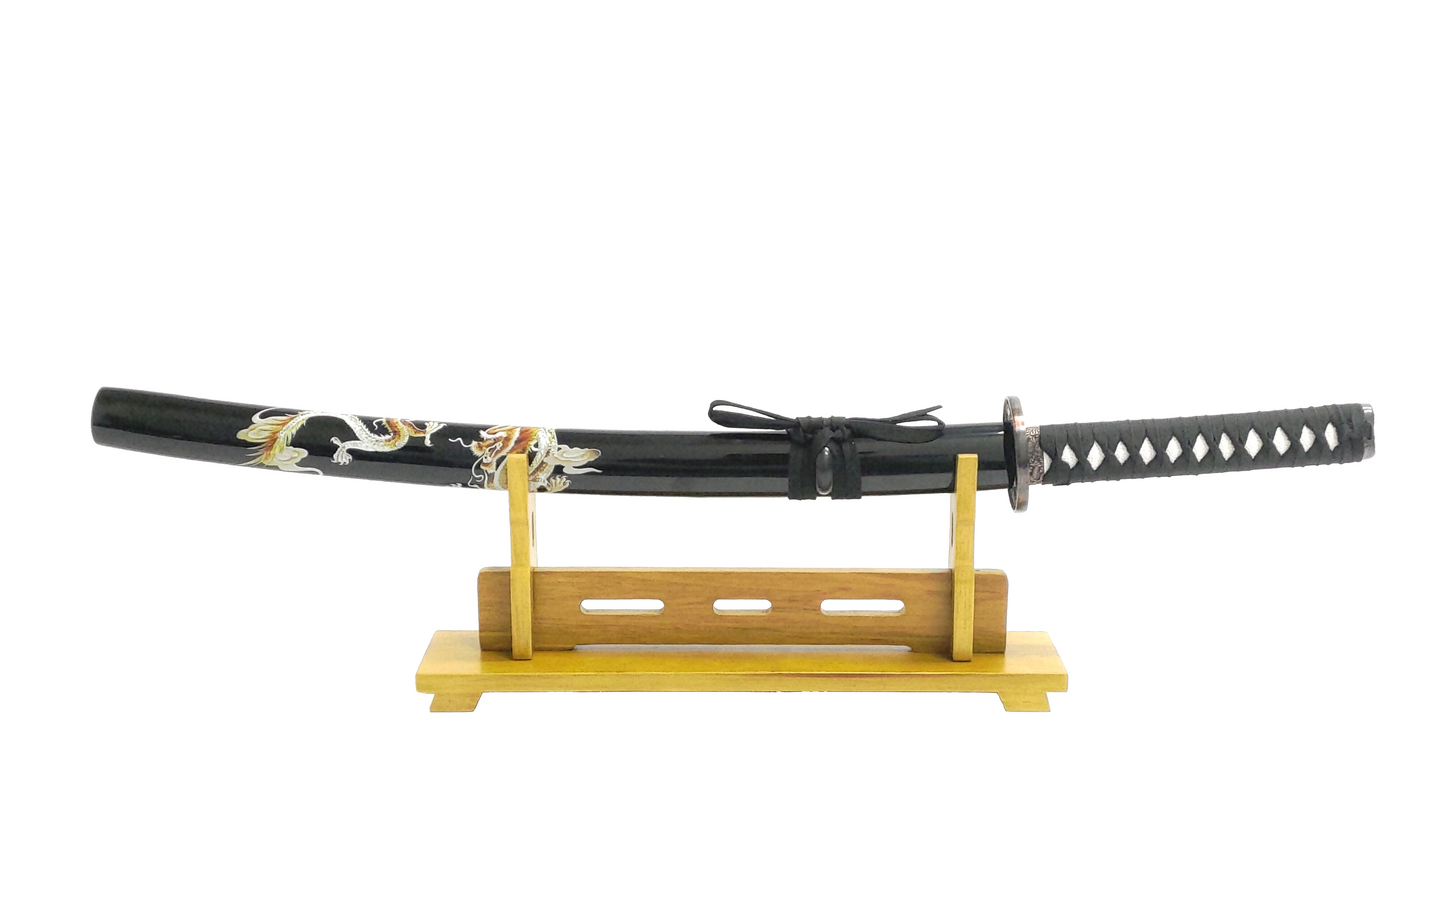 GOLDEN BAMBOO WOODEN PREMIUM SINGLE SWORD DISPLAY STAND FOR SAMURAI & KATANA SWORDS